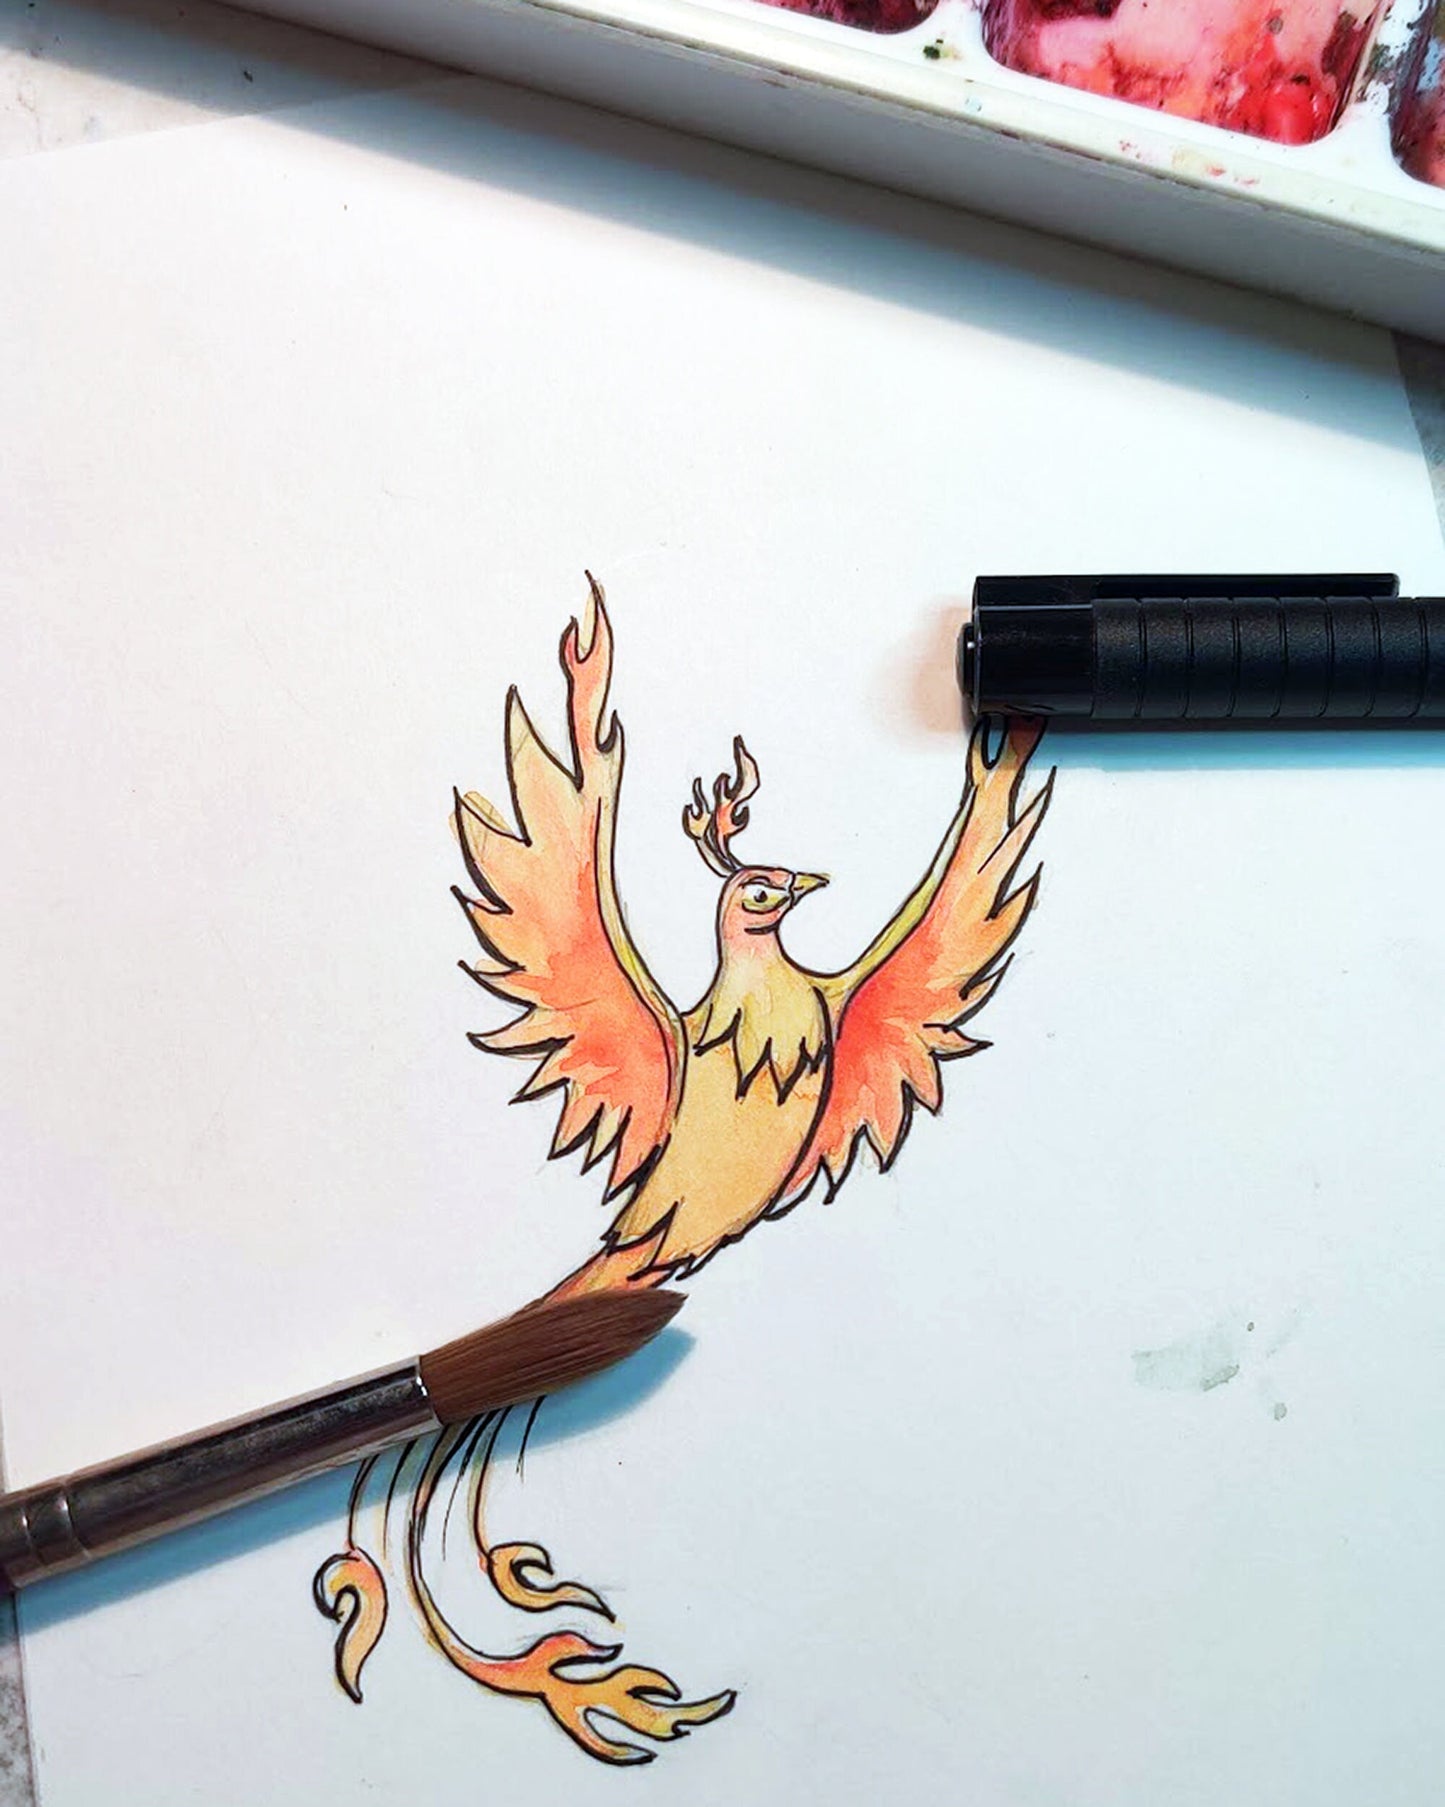 Watercolor Tattoo Bird Tattoo Design Set of 4